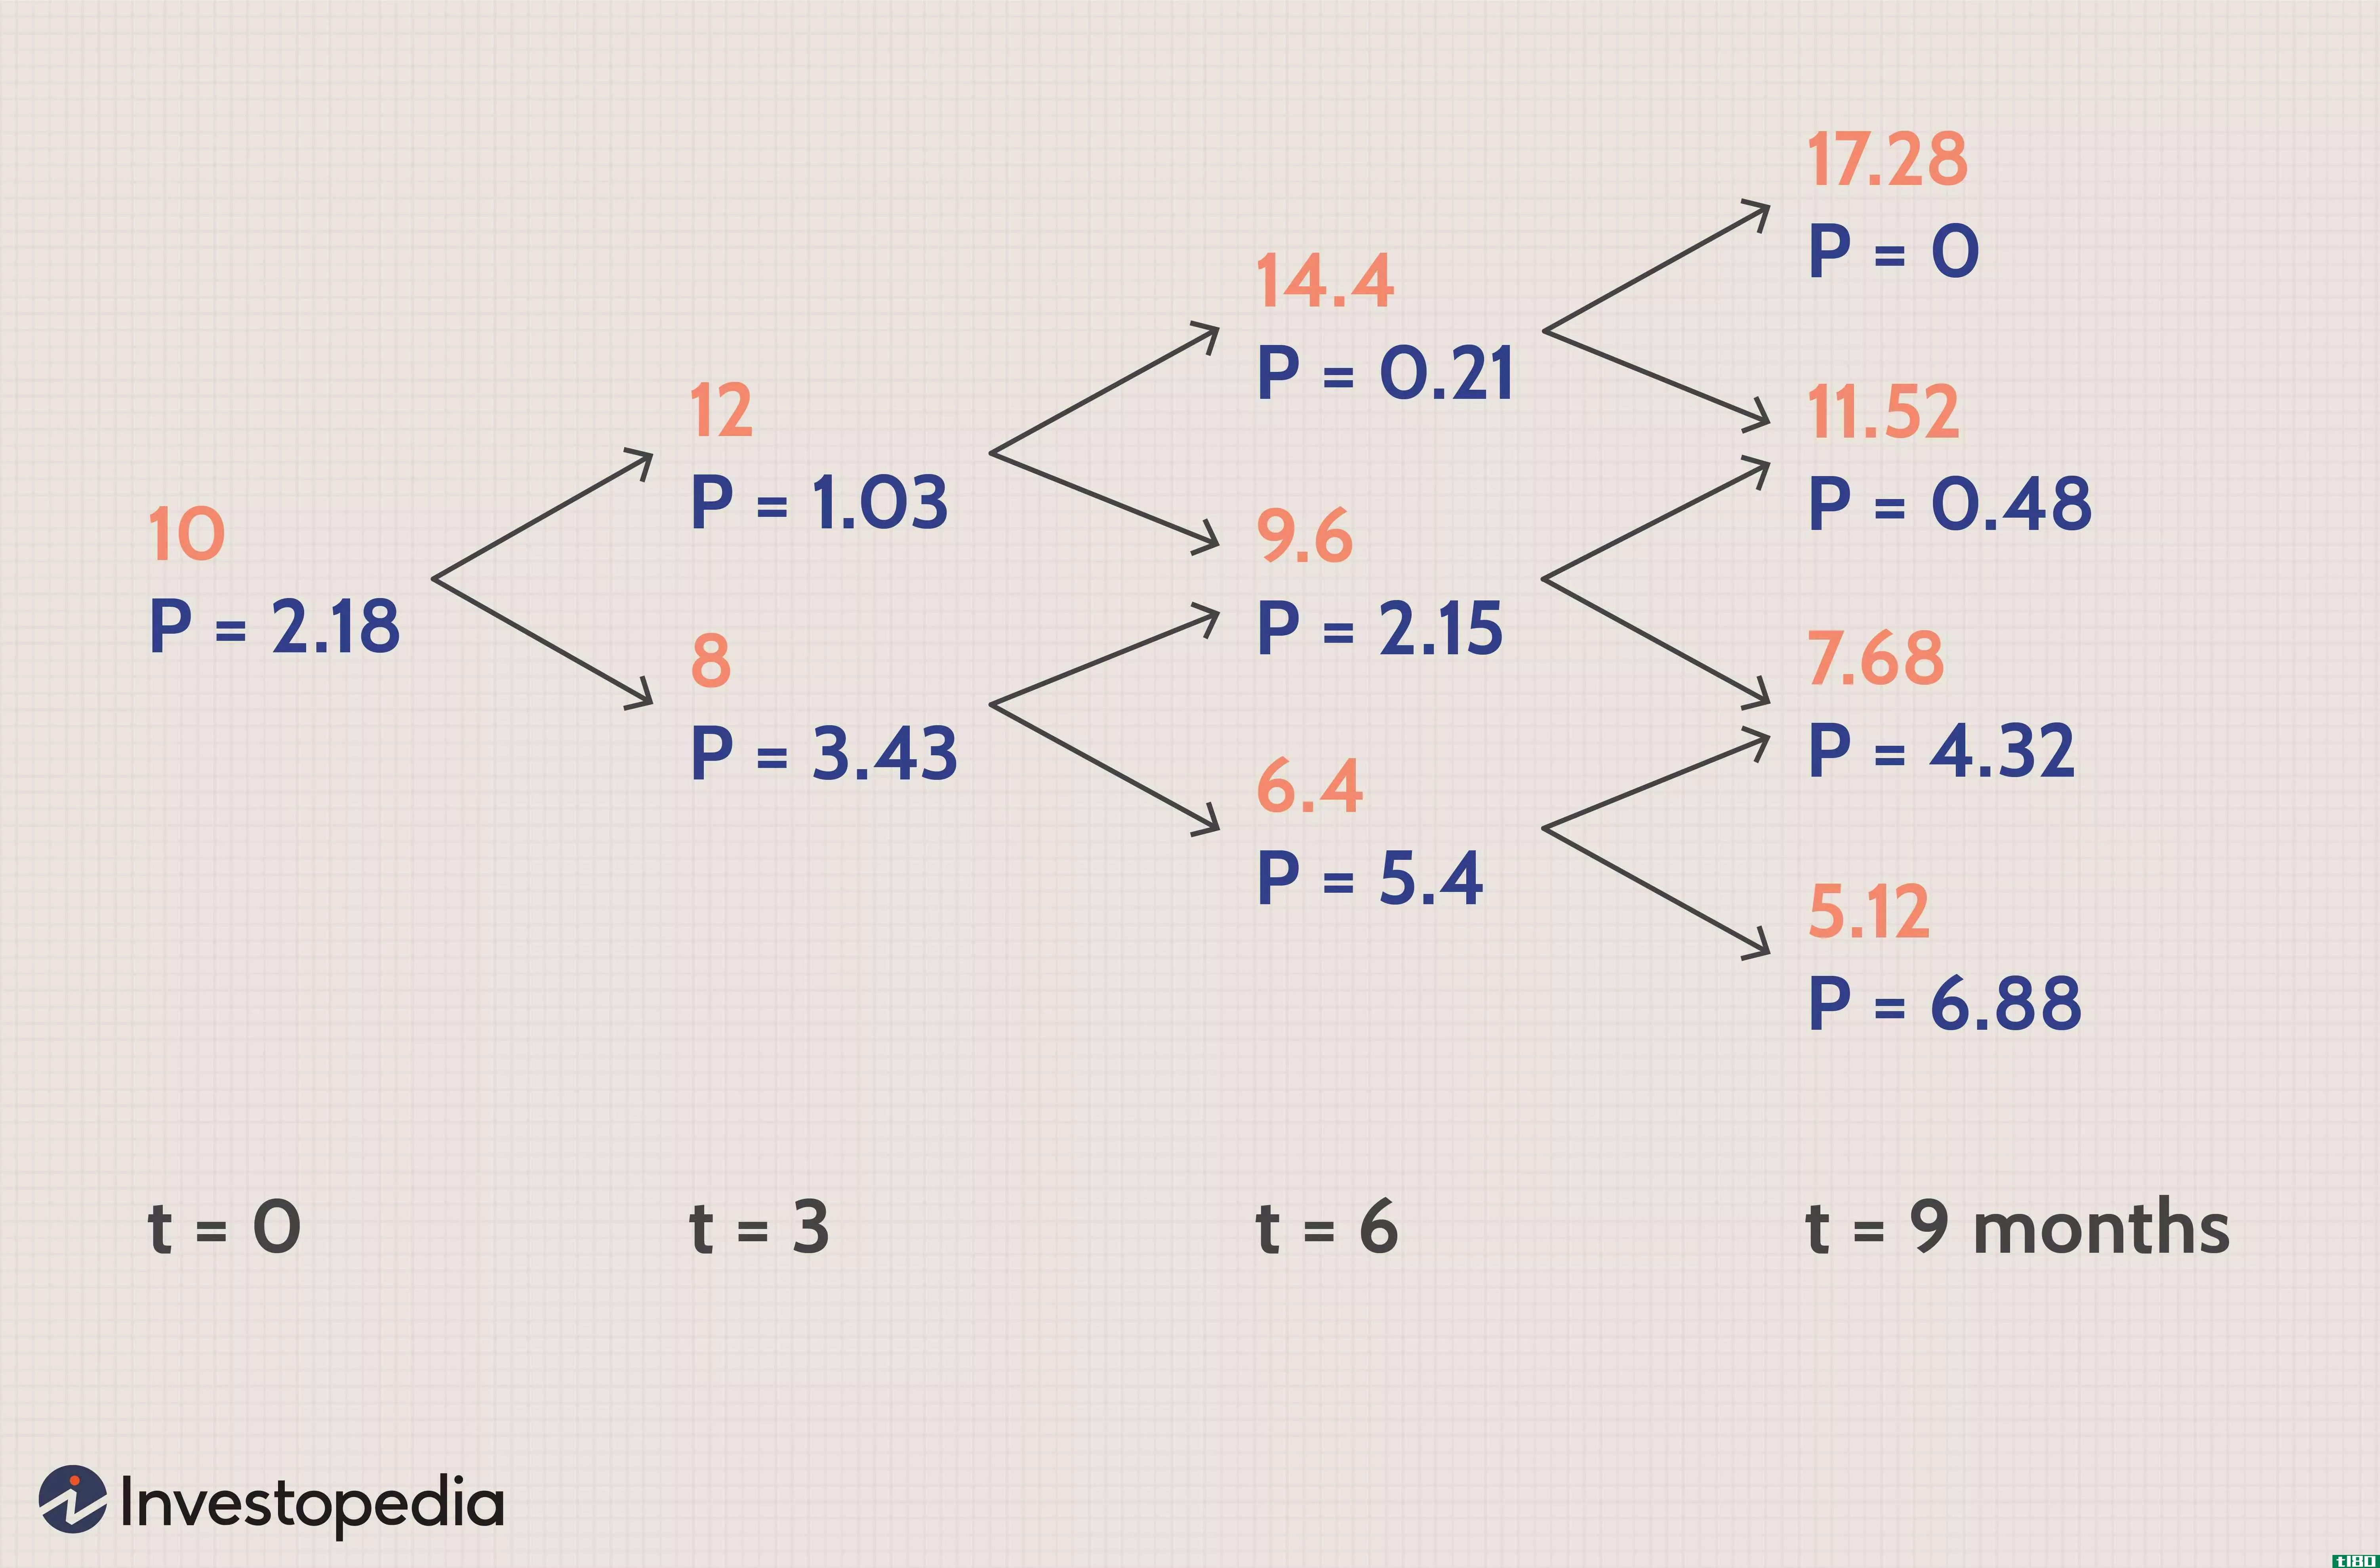 Binomial Tree Model for Opti*** Pricing